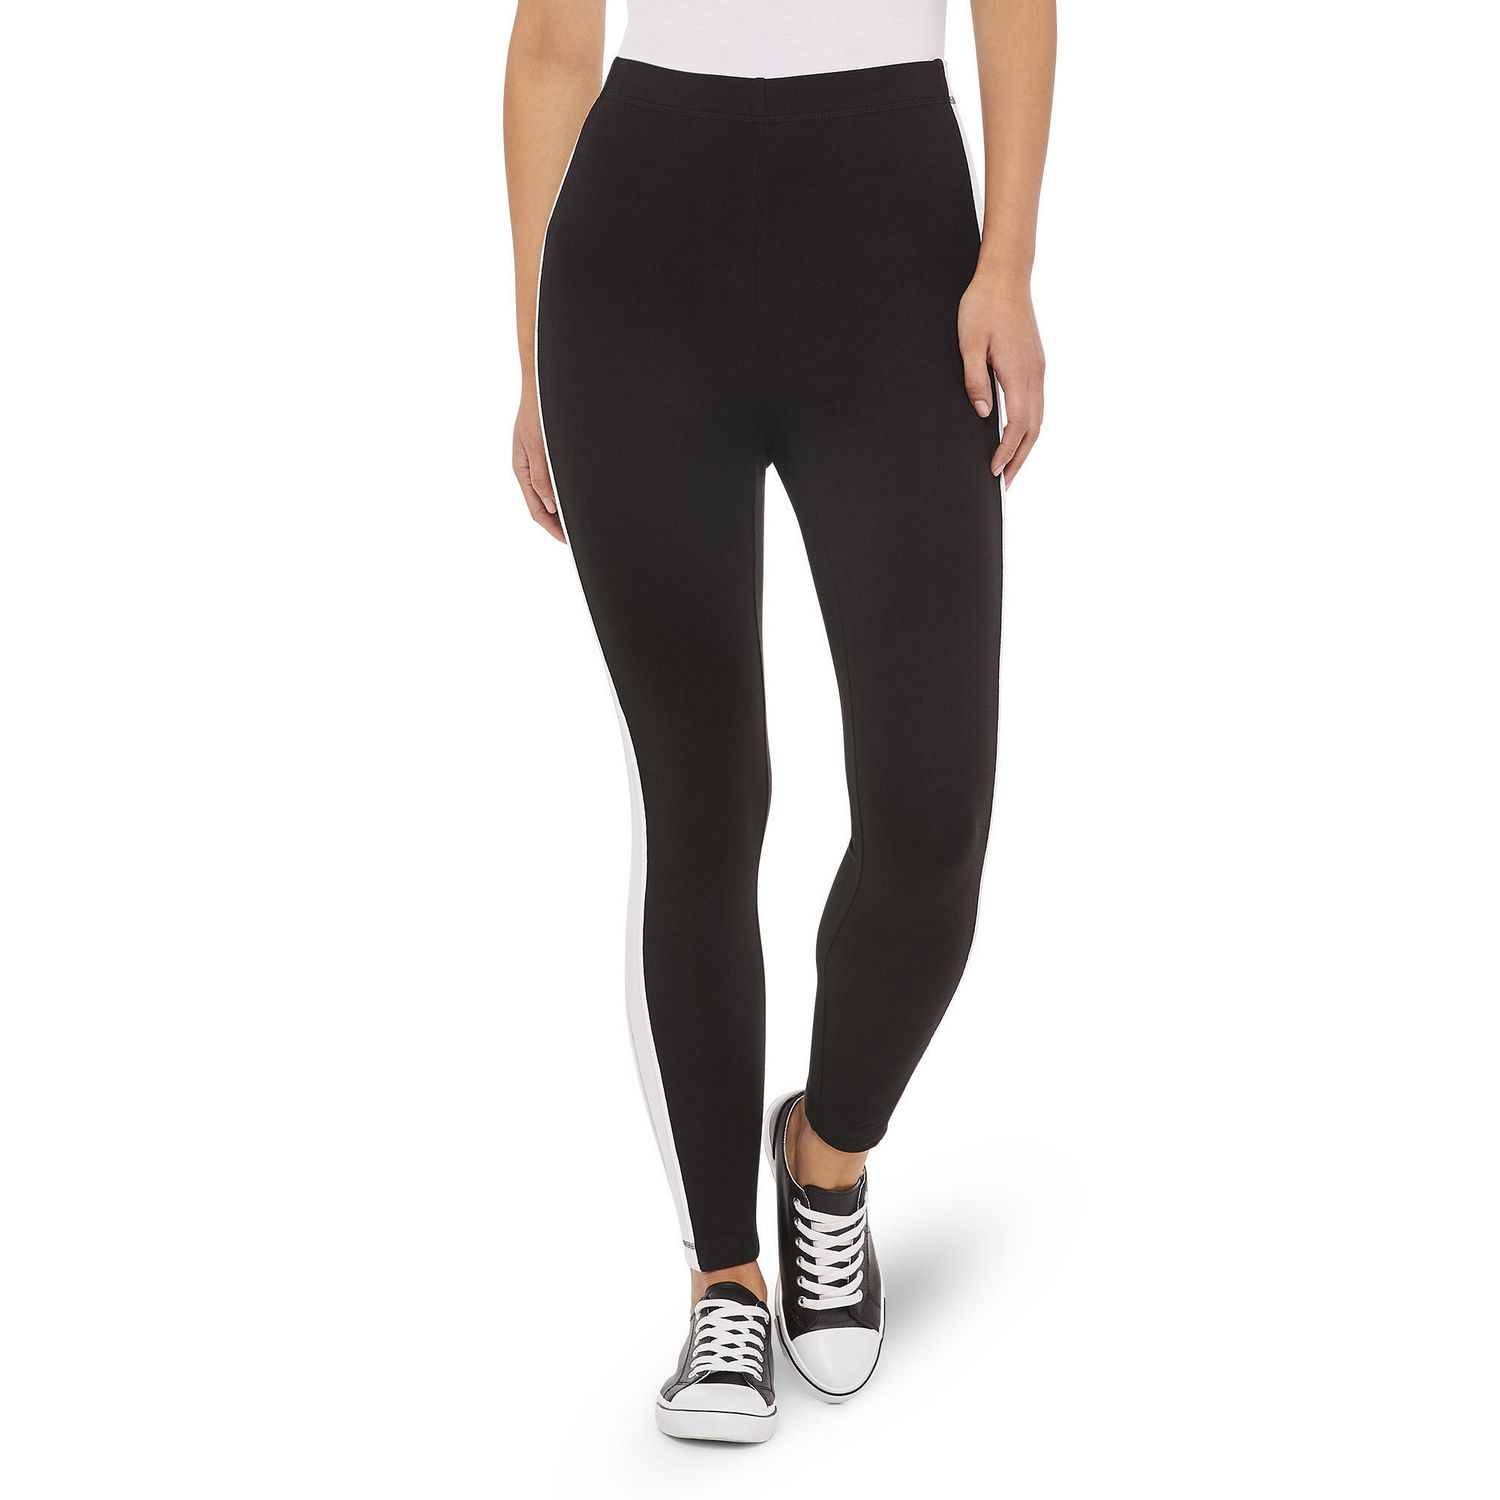 Casual Plaid Regular Black and White Plus Size Leggings (Women's) - Walmart .com